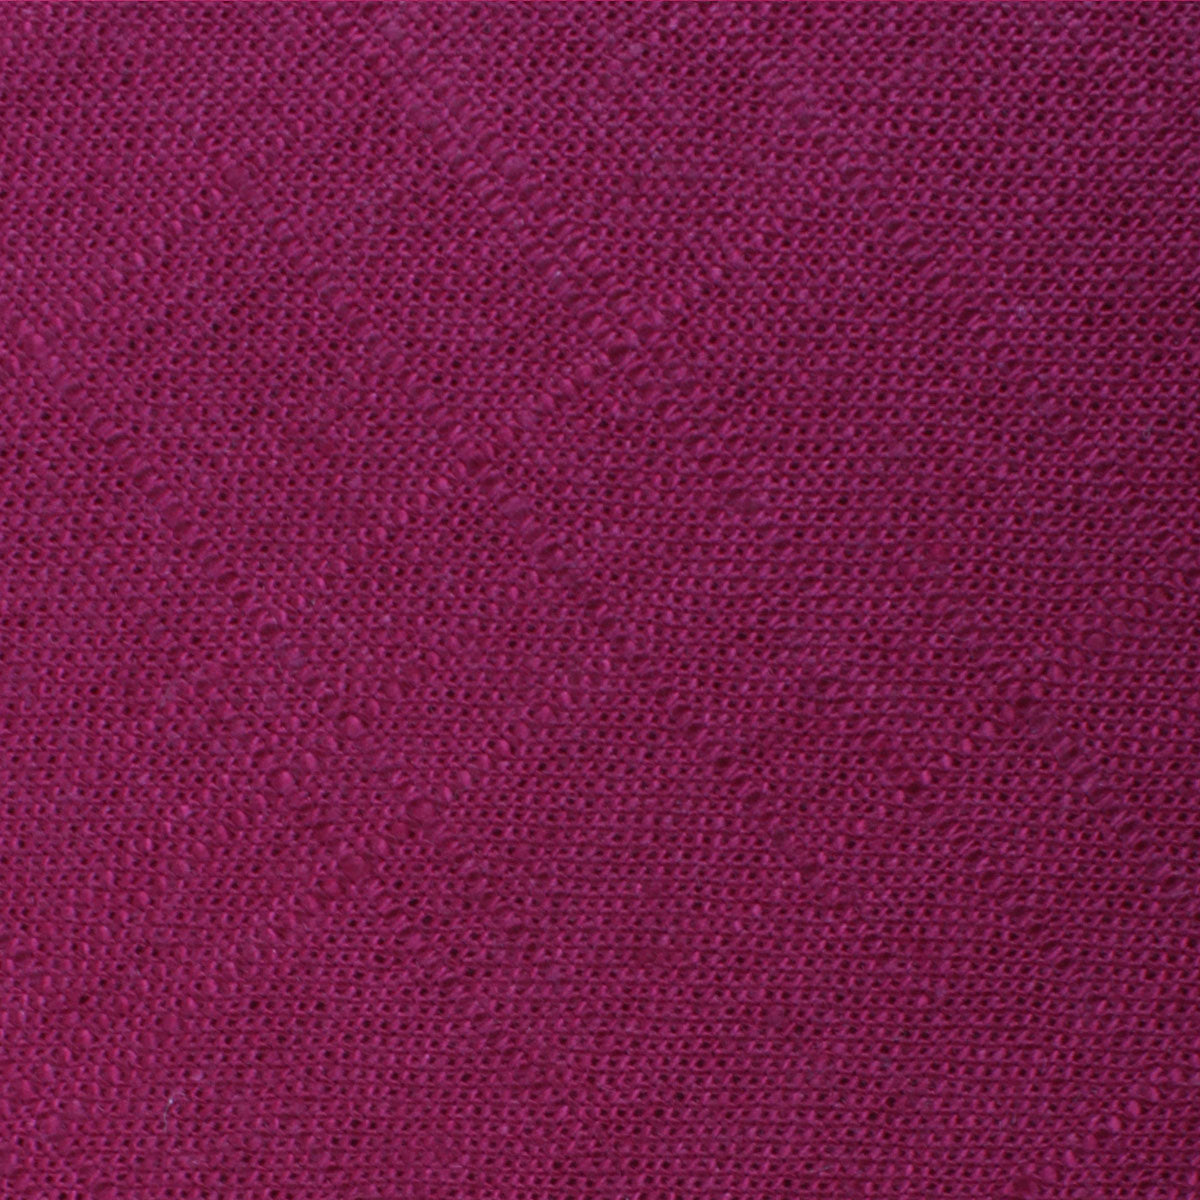 Sangria Slub Linen Fabric Swatch